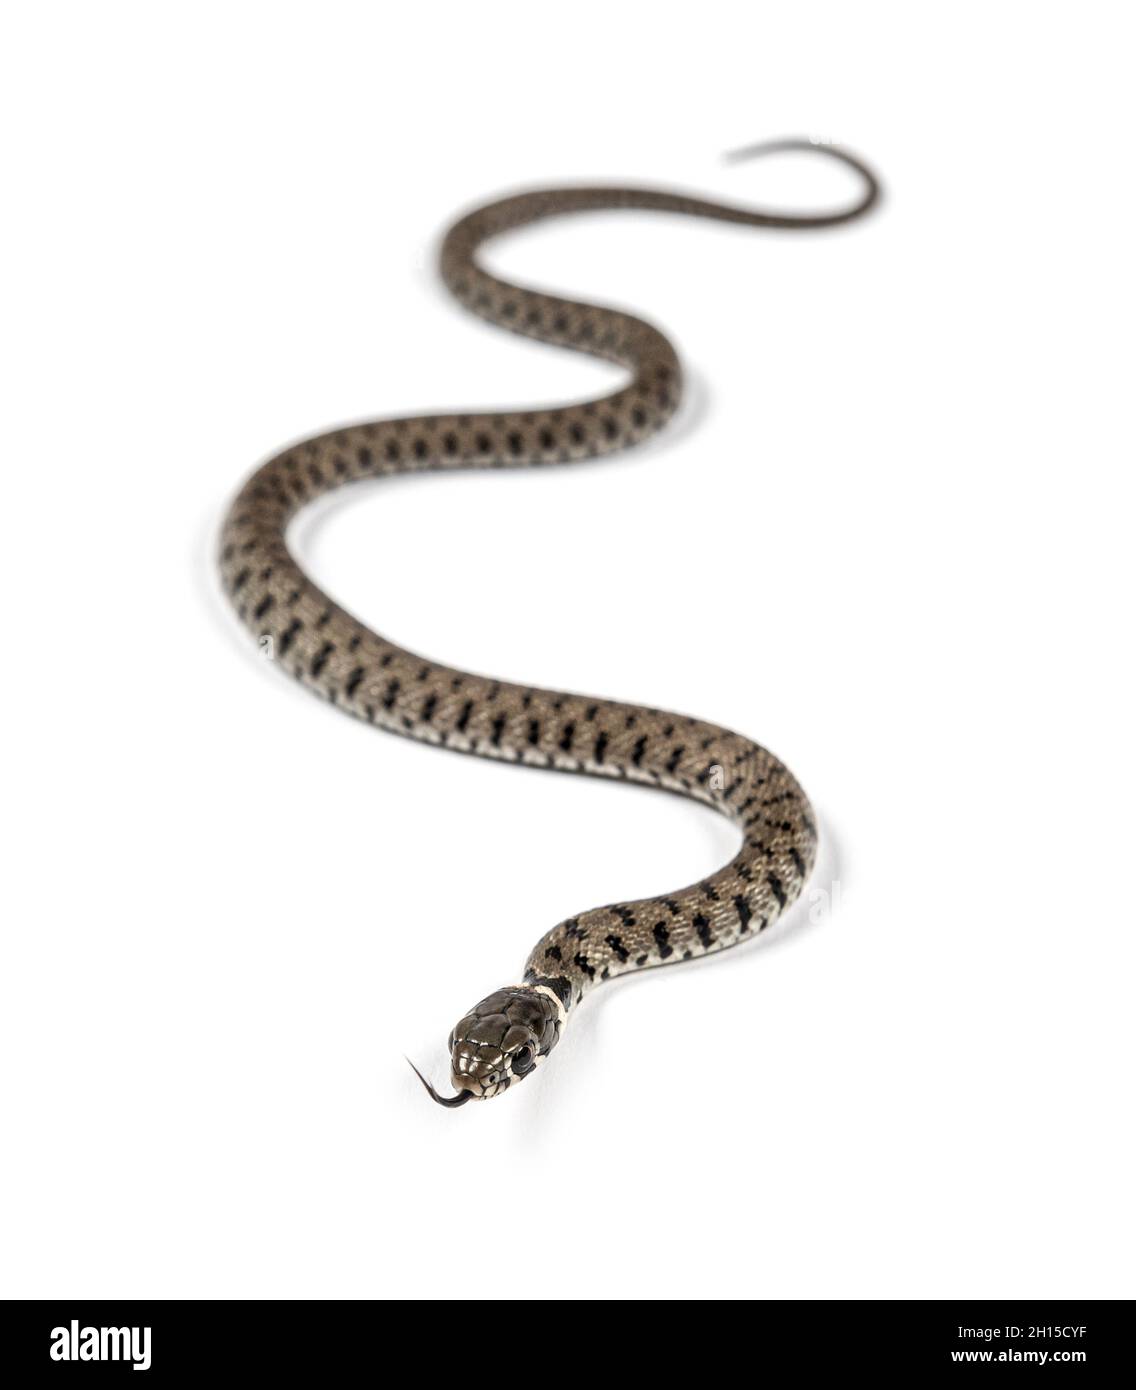 Grass snake, Natrix natrix, Isolated on white Stock Photo